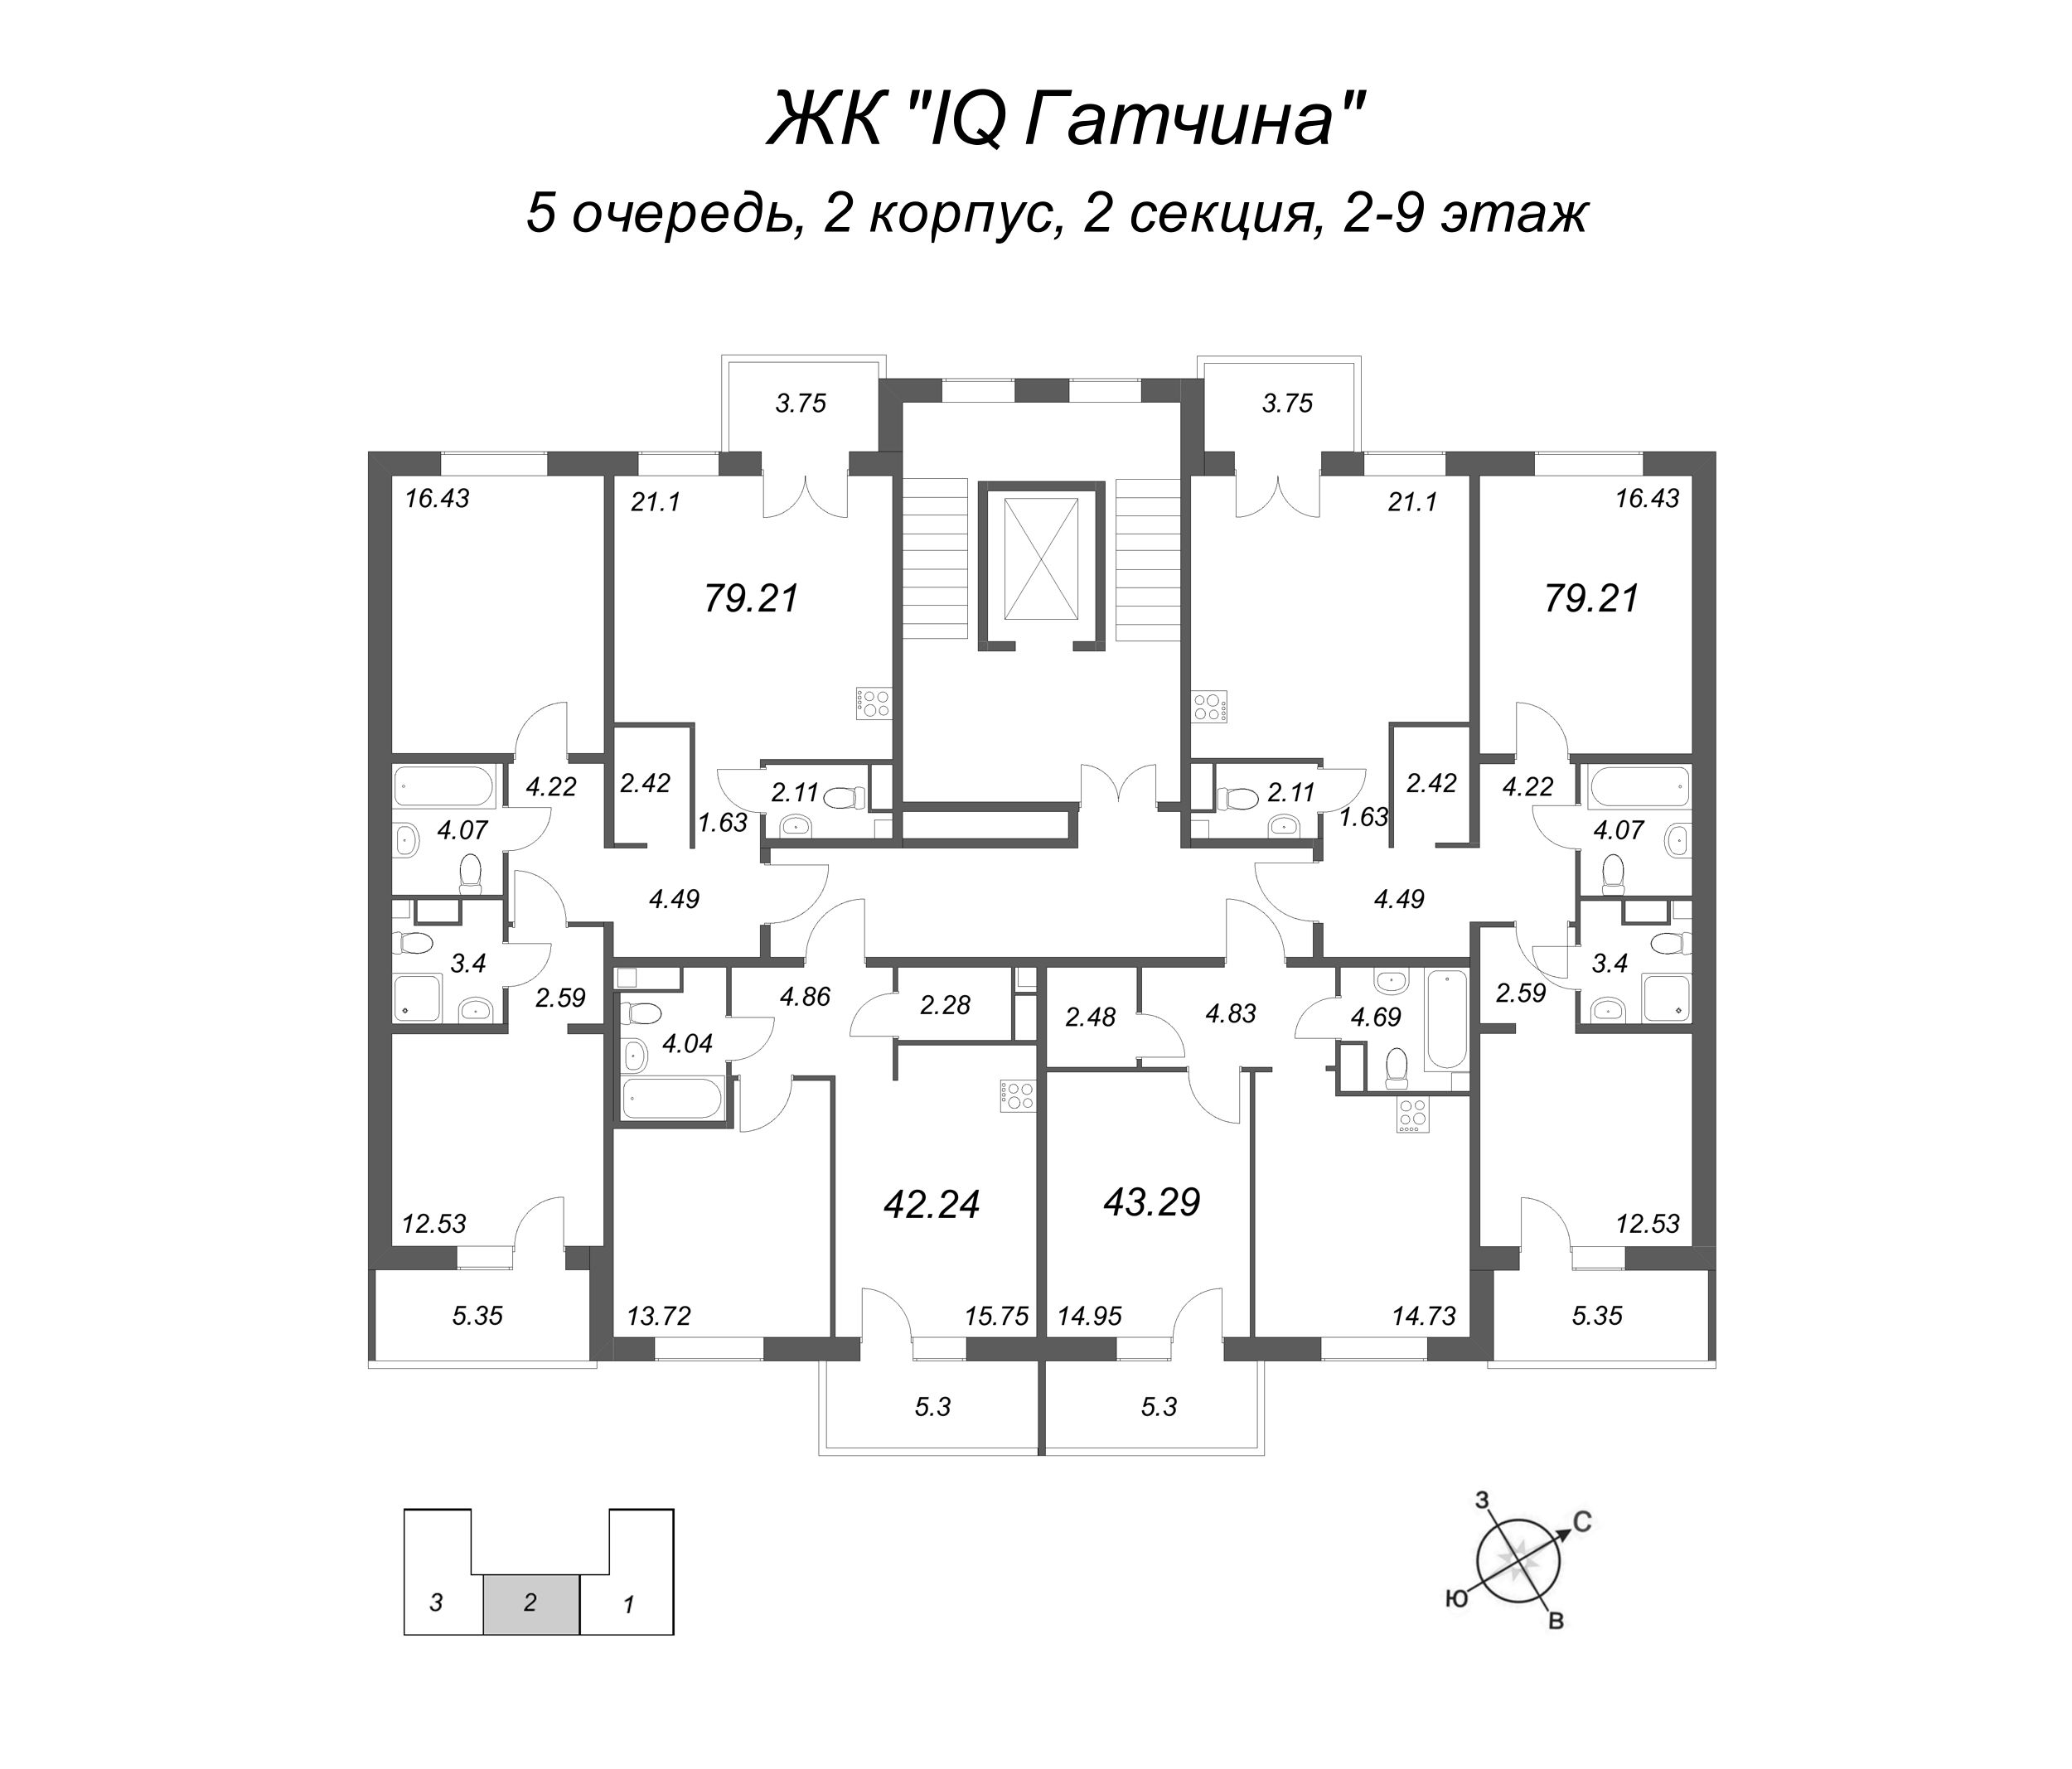 2-комнатная (Евро) квартира, 45.95 м² - планировка этажа